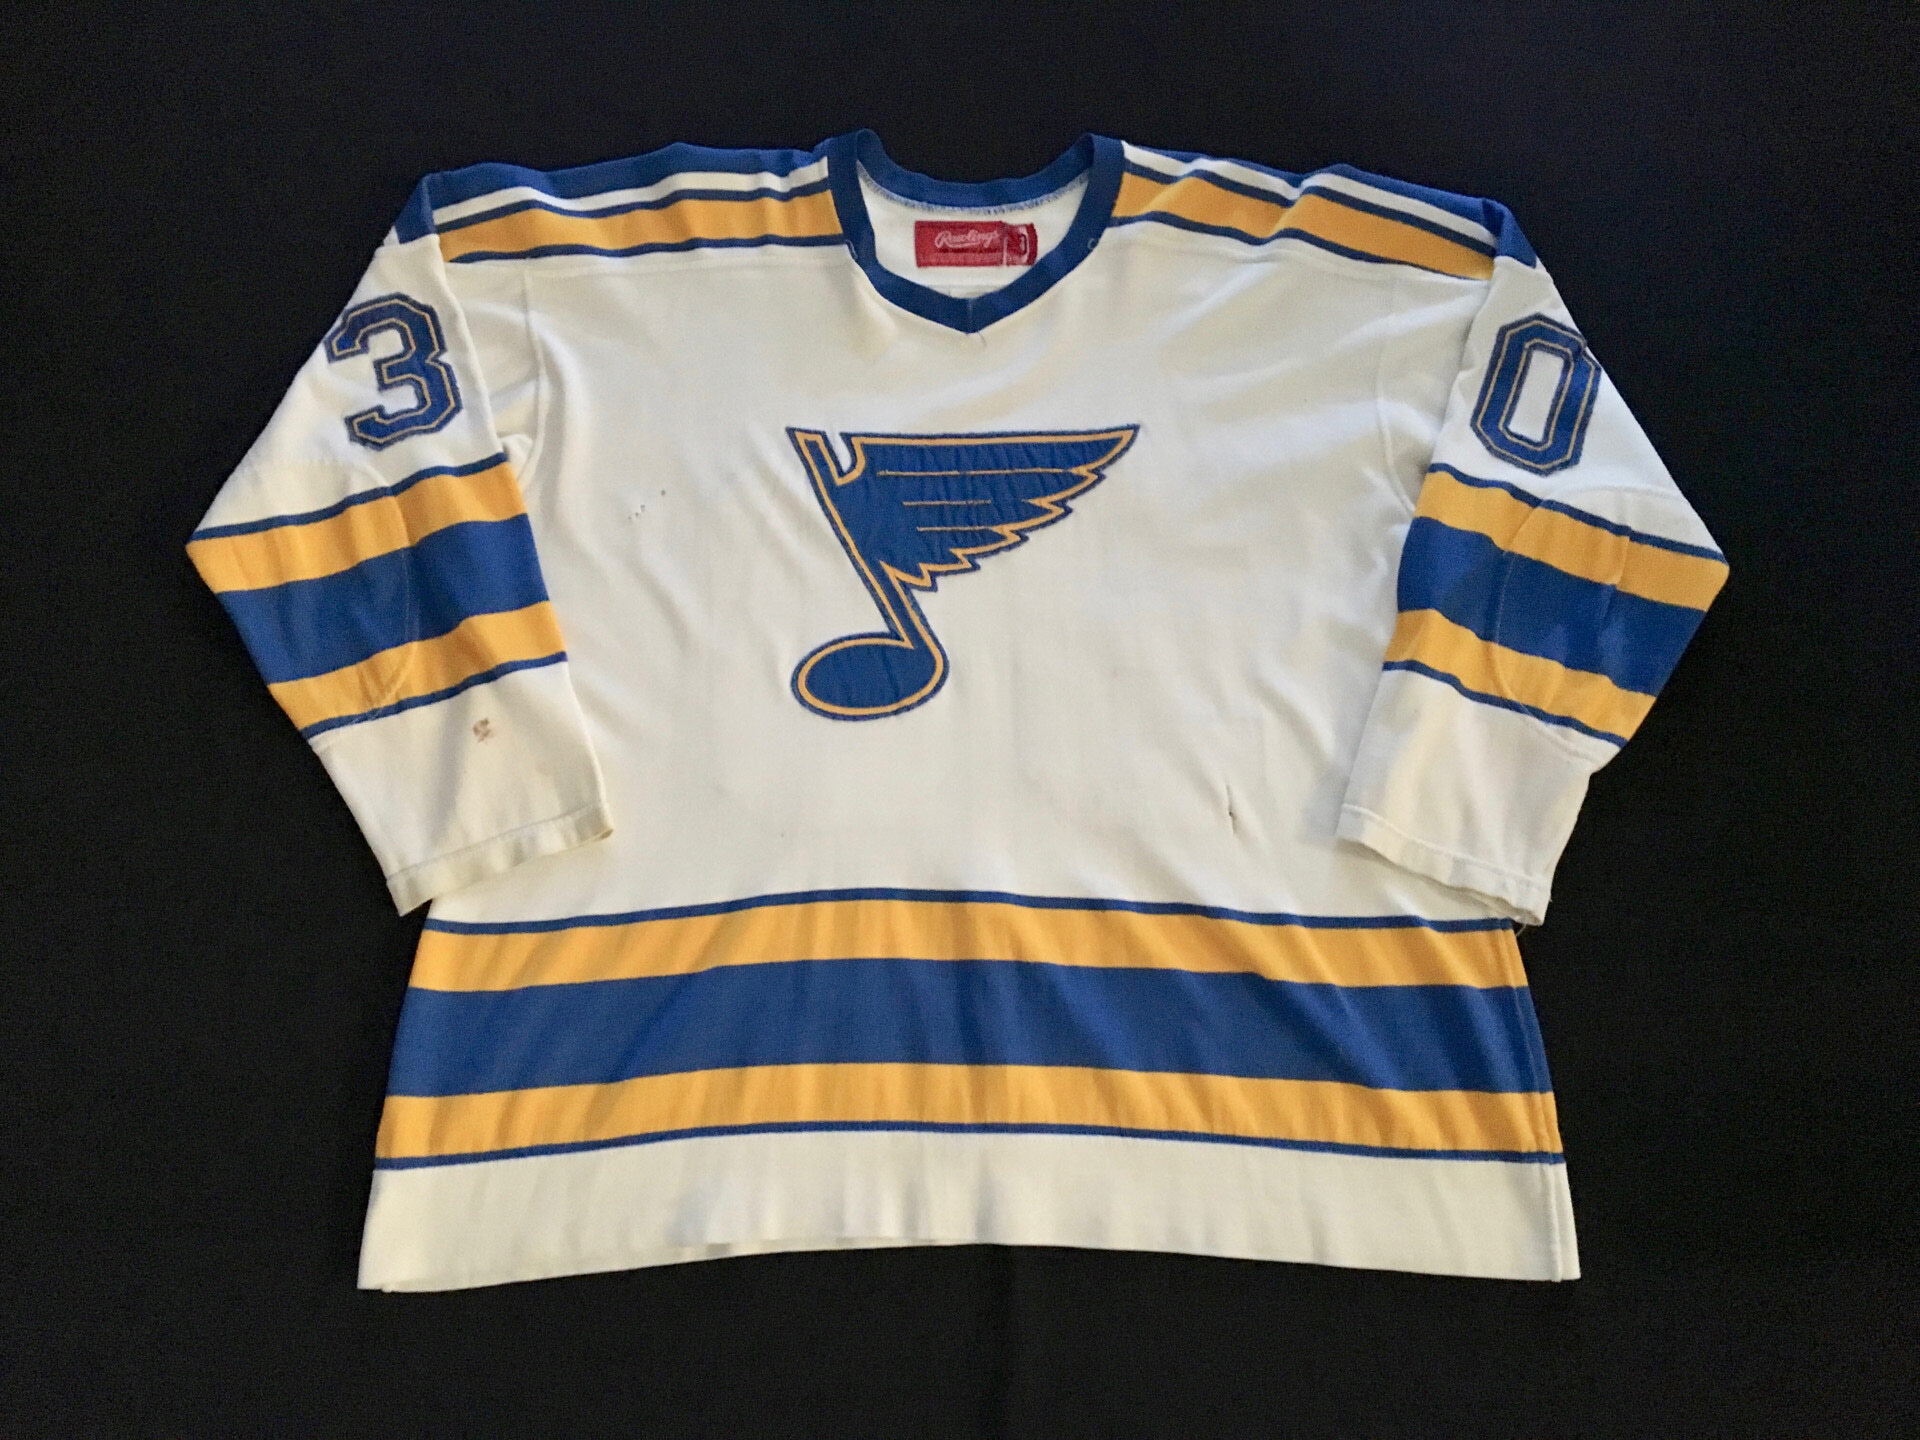 St. Louis Blues - #HockeyFightsCancer jerseys featured 8